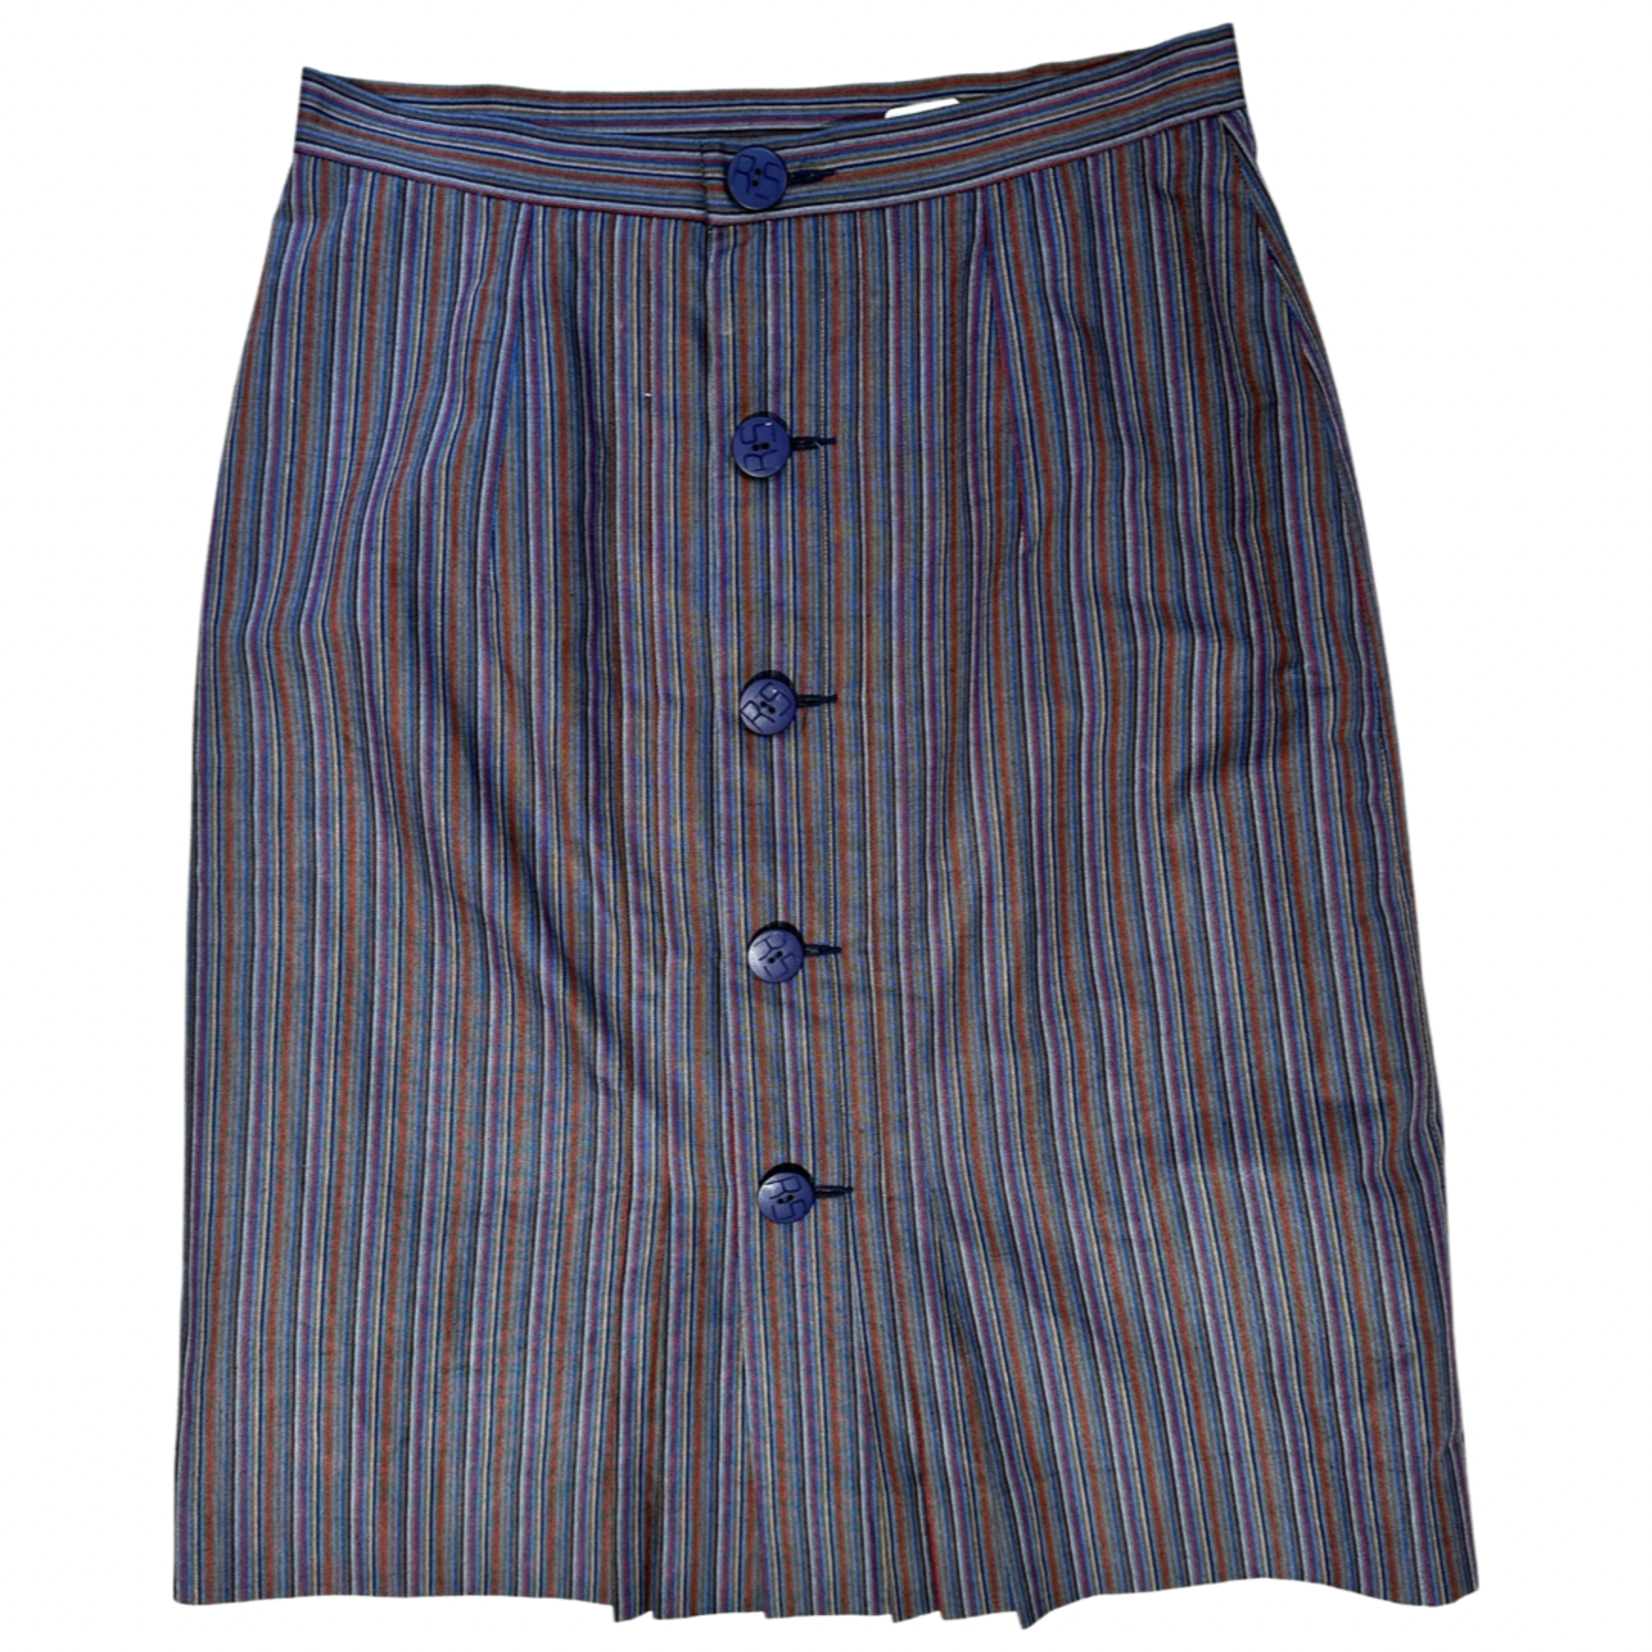 Vintage Vintage rechte rok met knopen en kleine plooien size S/M